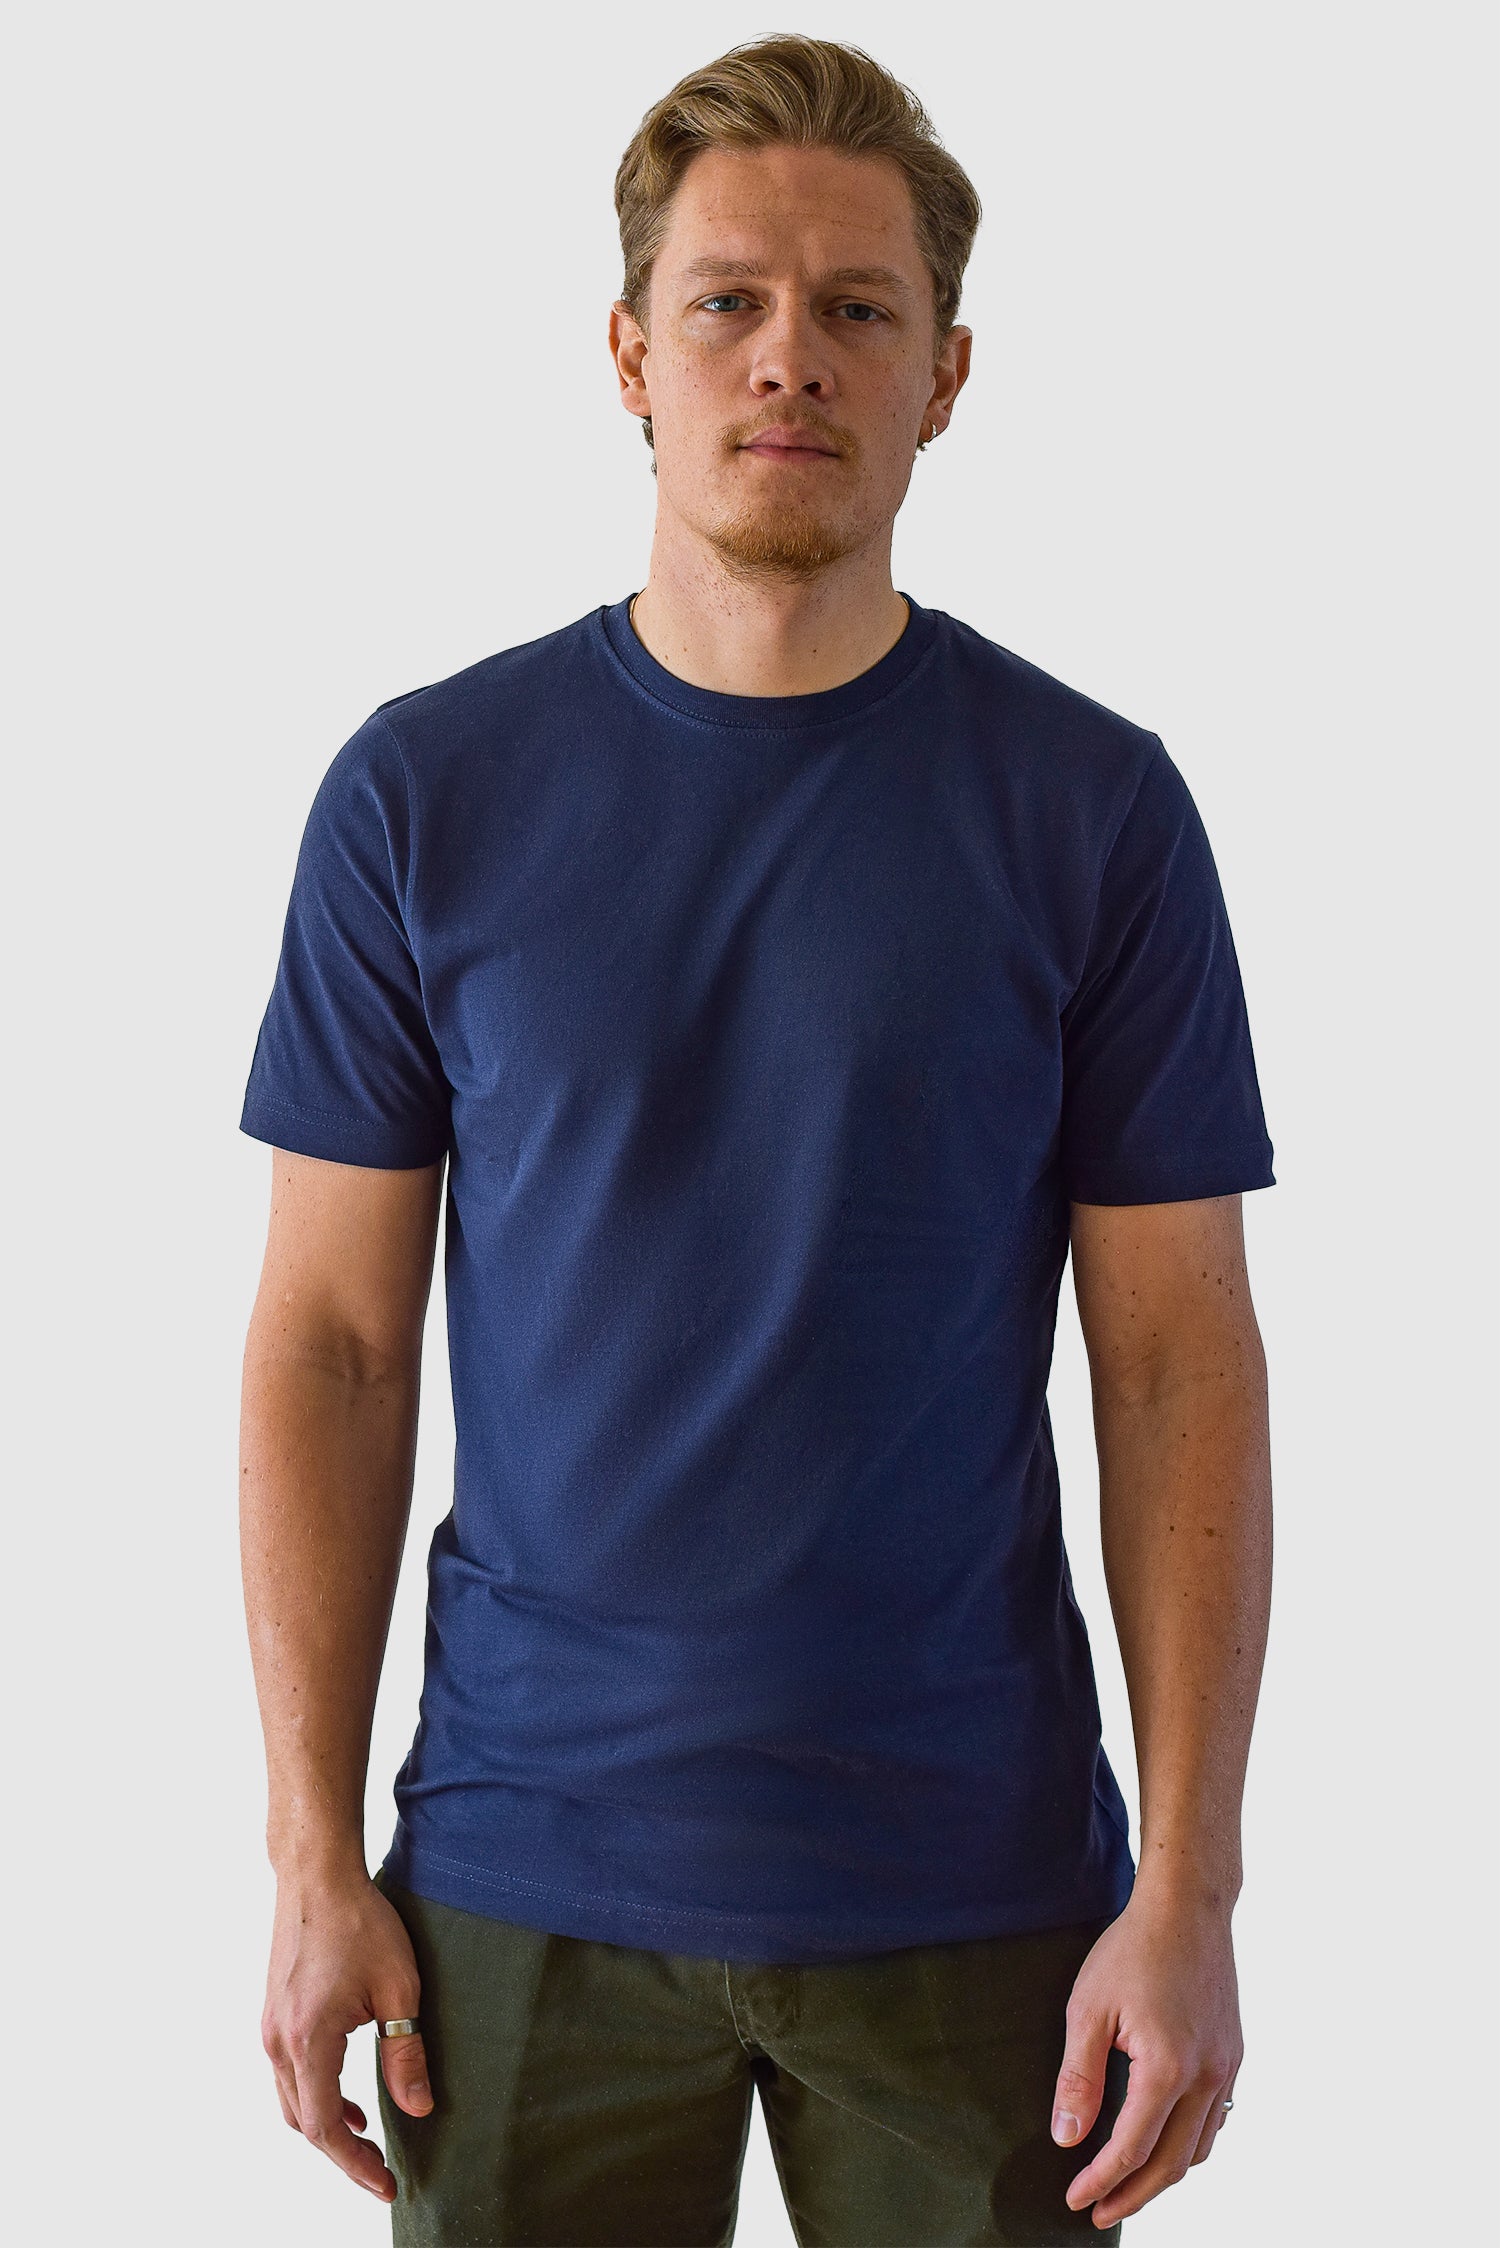 Organic Basic T-shirt, Navy Blue